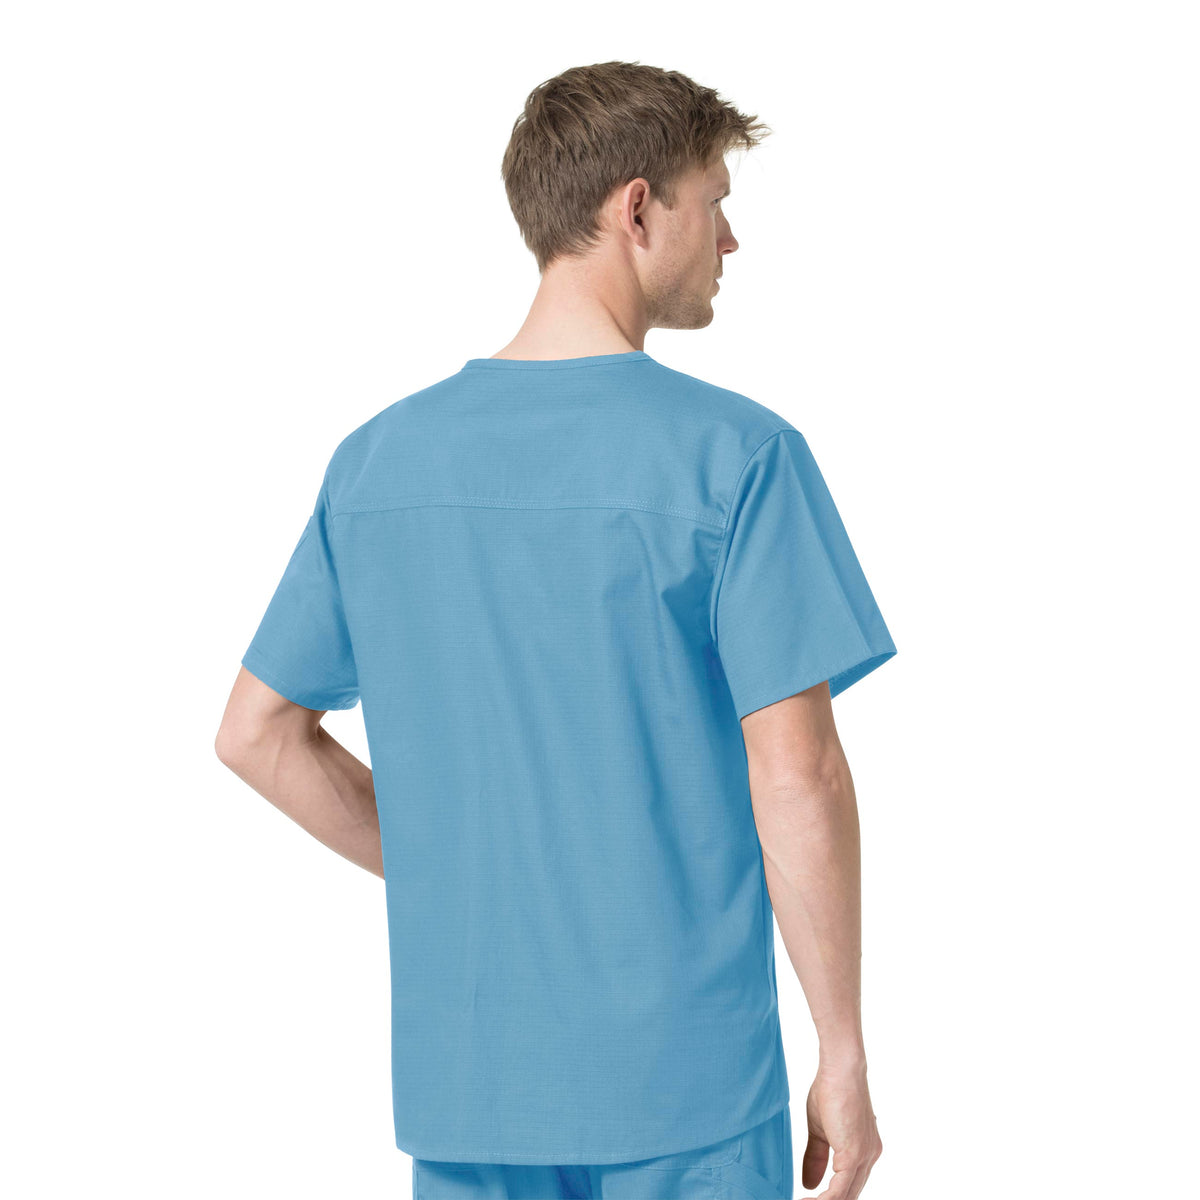 Rugged Flex Ripstop Men's Modern Fit Ripstop Chest Pocket Scrub Top Azure Blue back view